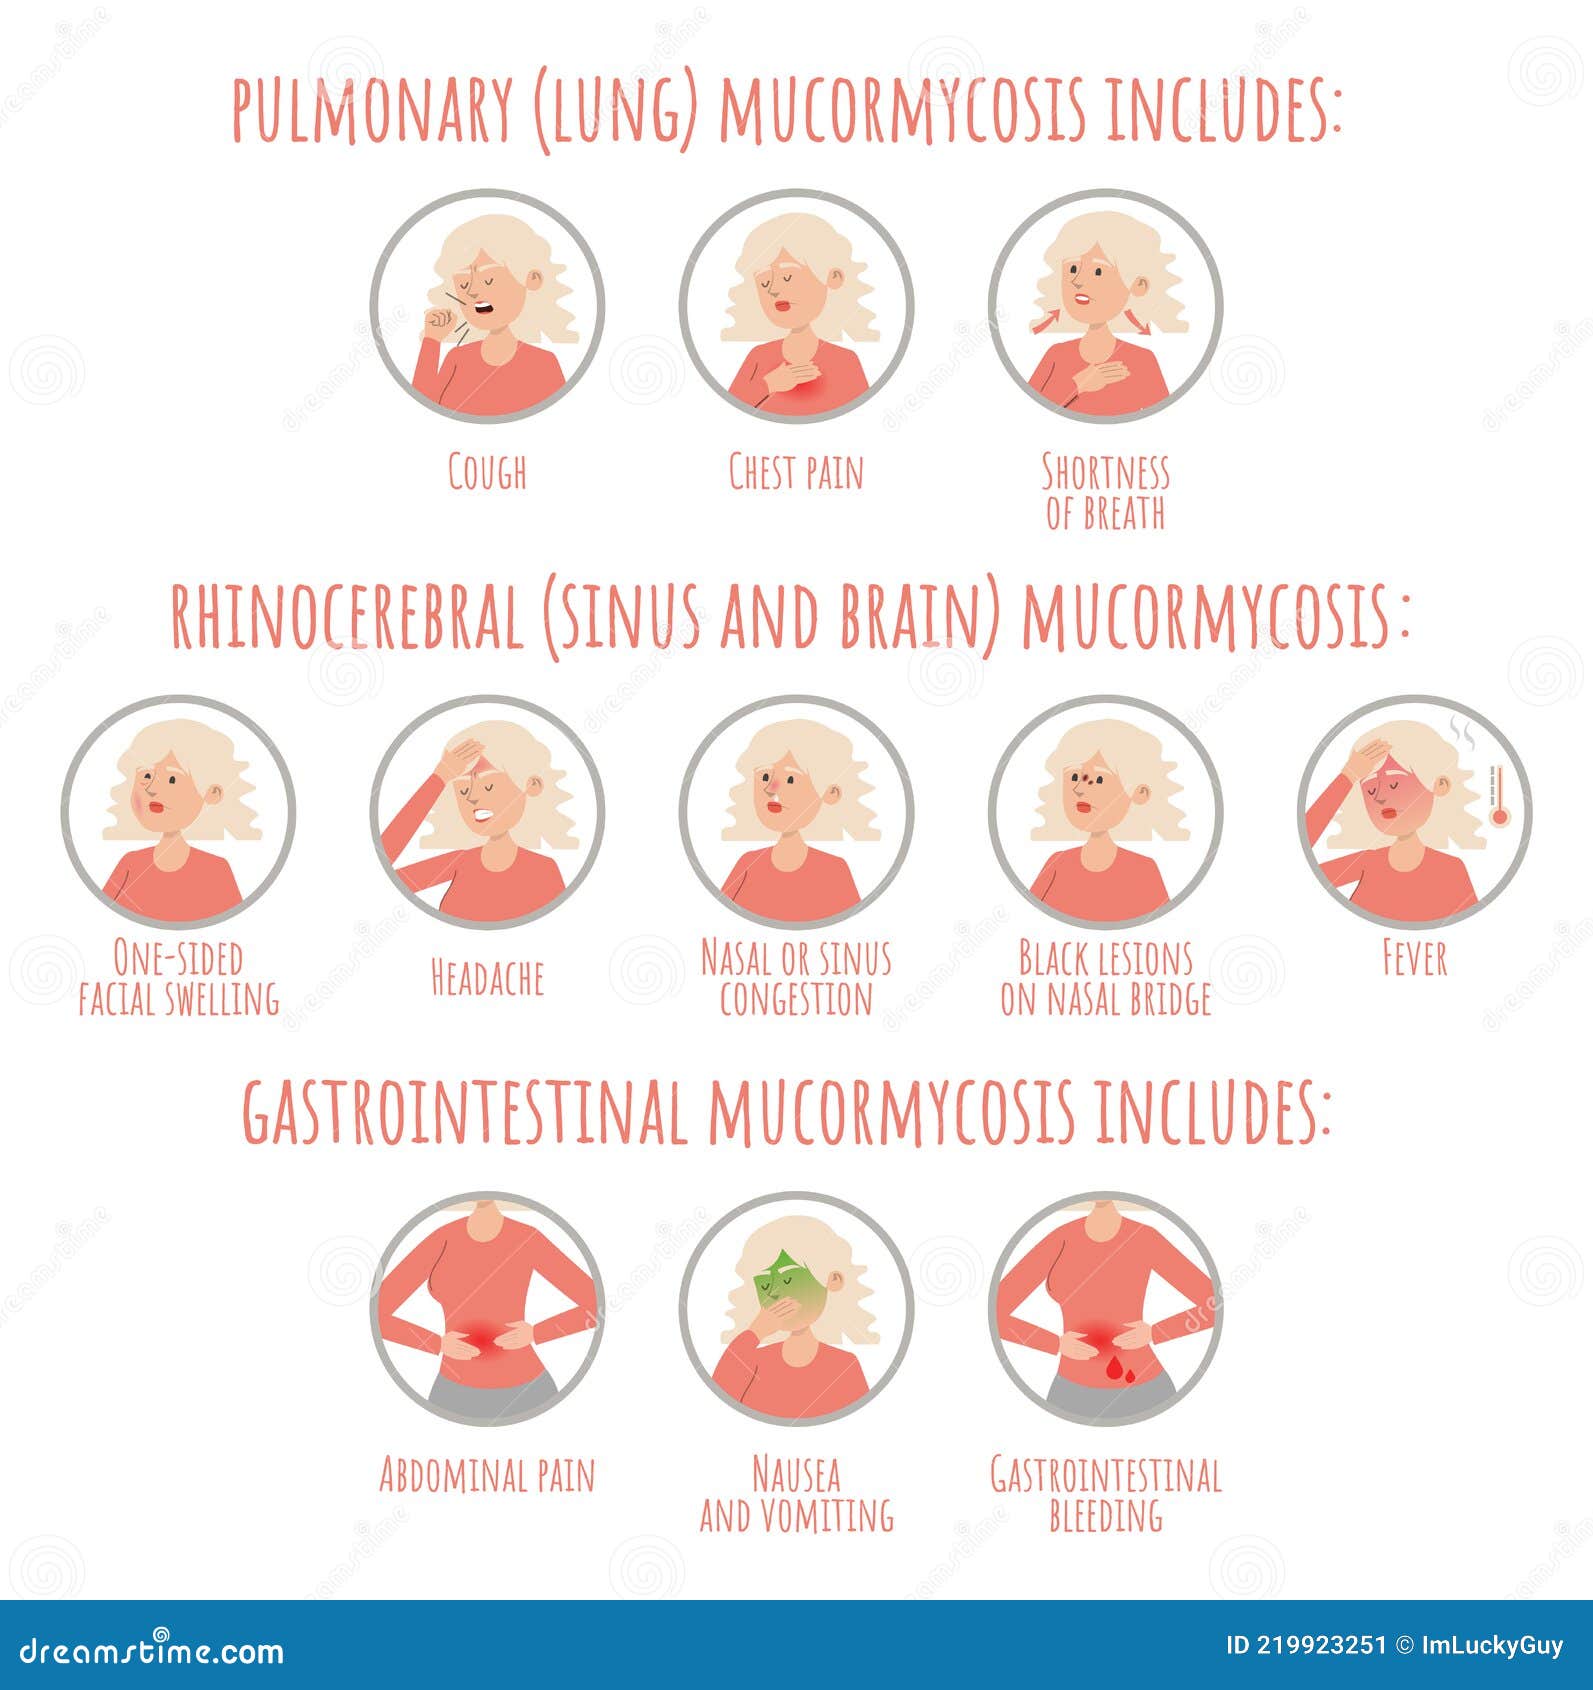 Mucormycosis symptoms